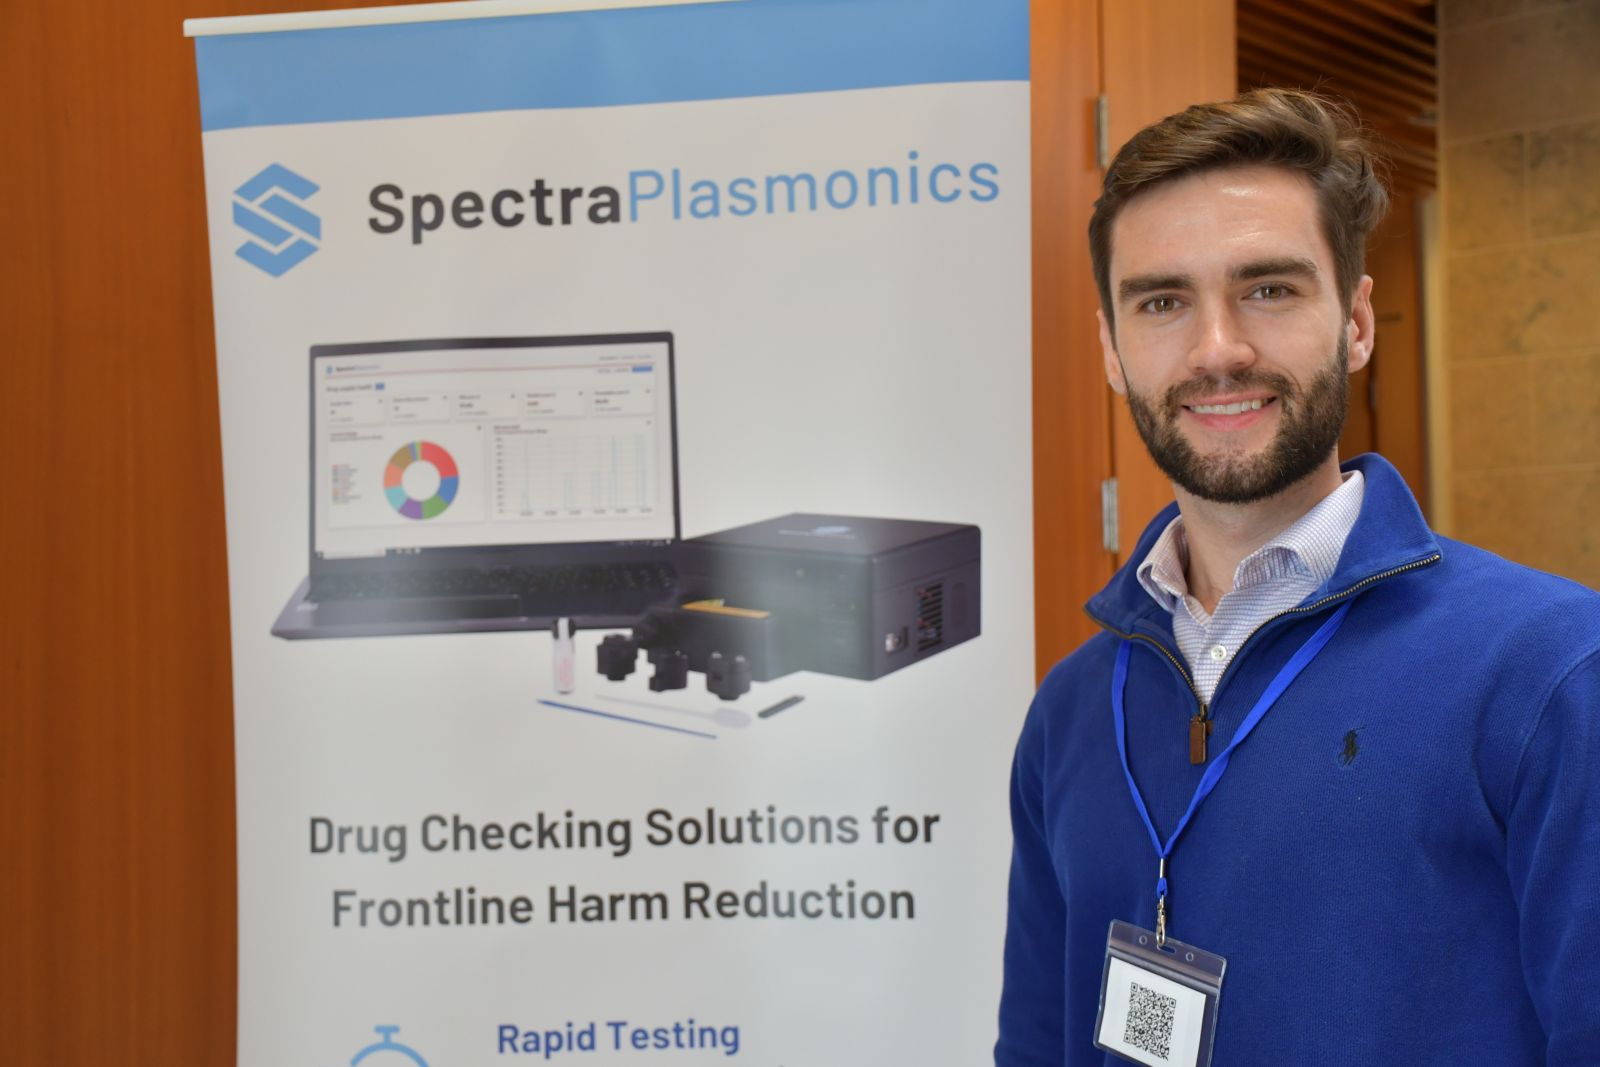 Spectra Plasmonics CEO Malcolm Eade also participated in the trade fair.